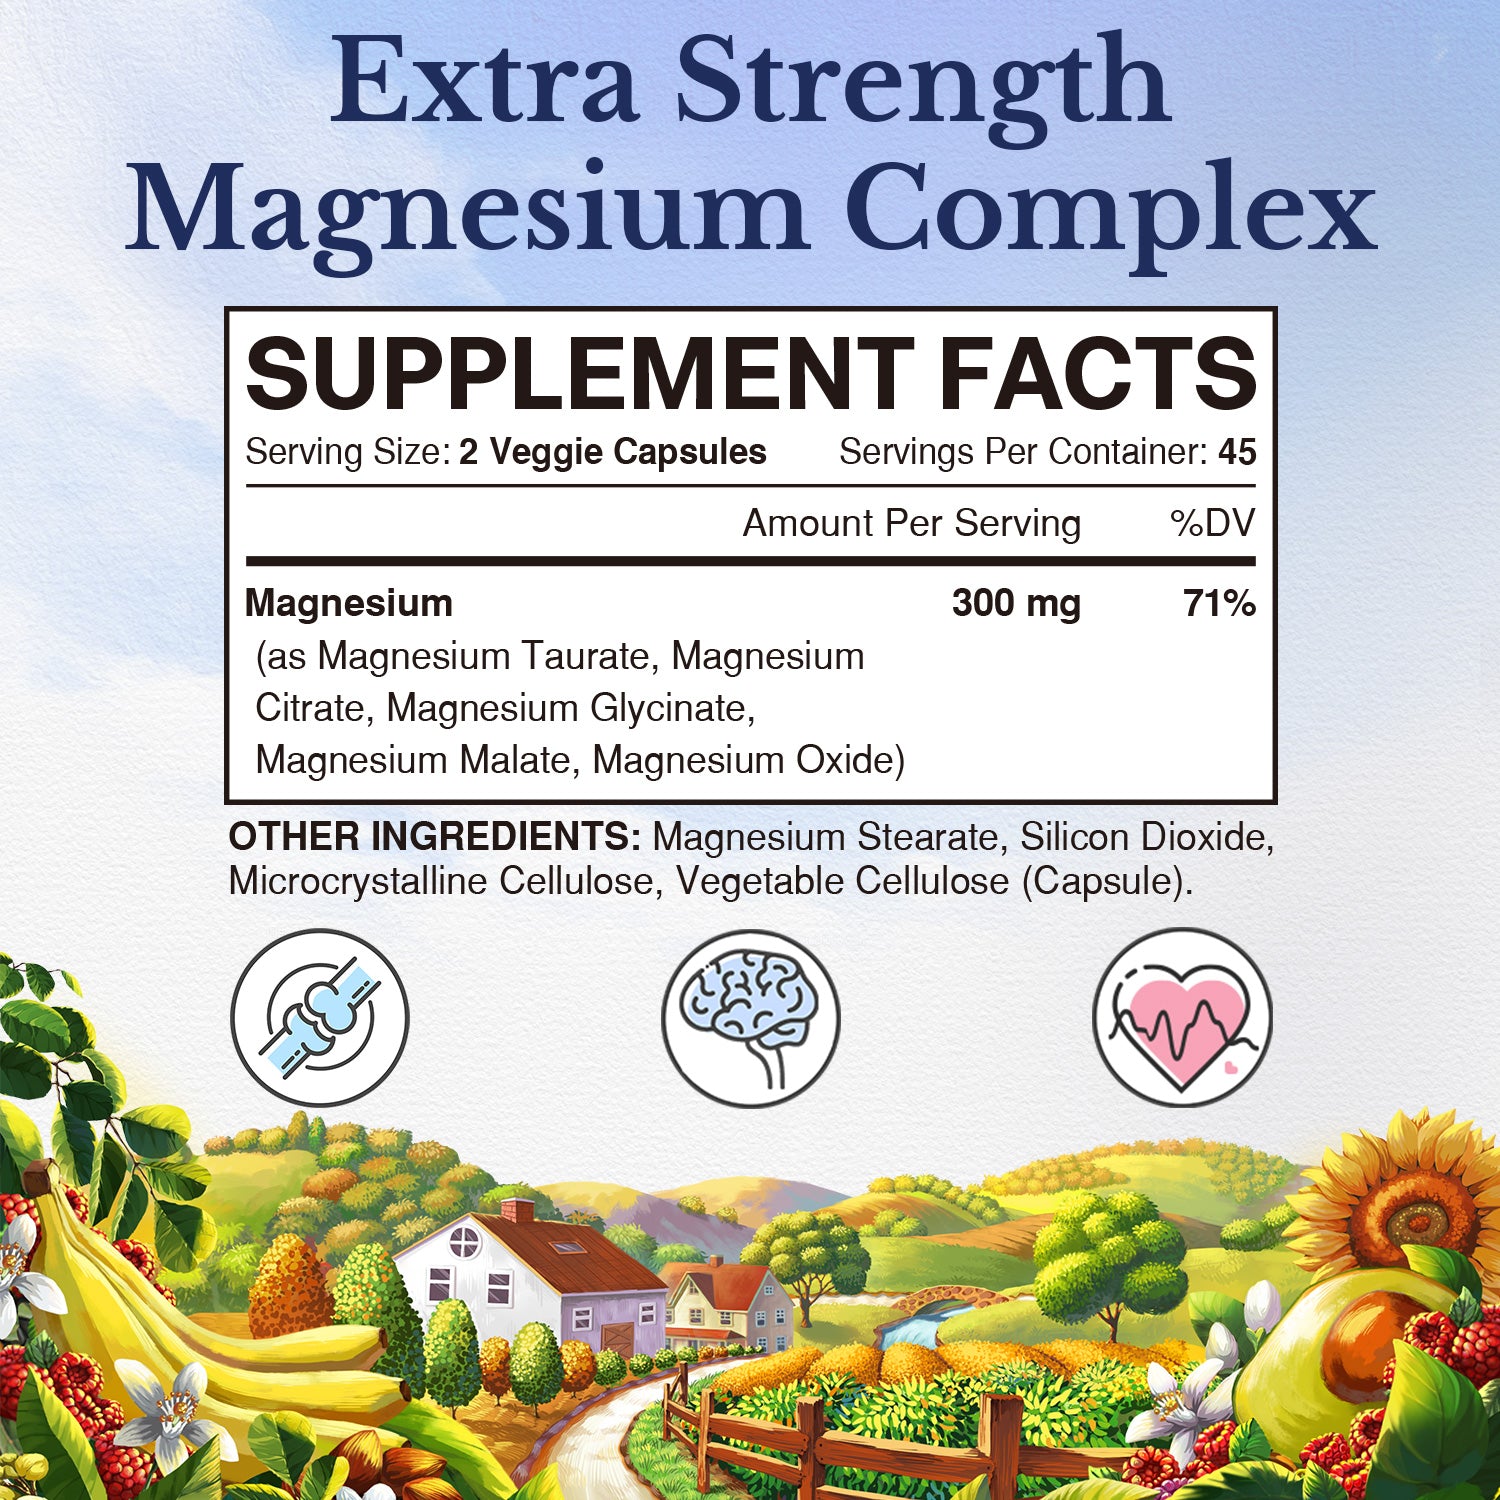 Extra Strength Magnesium Complex